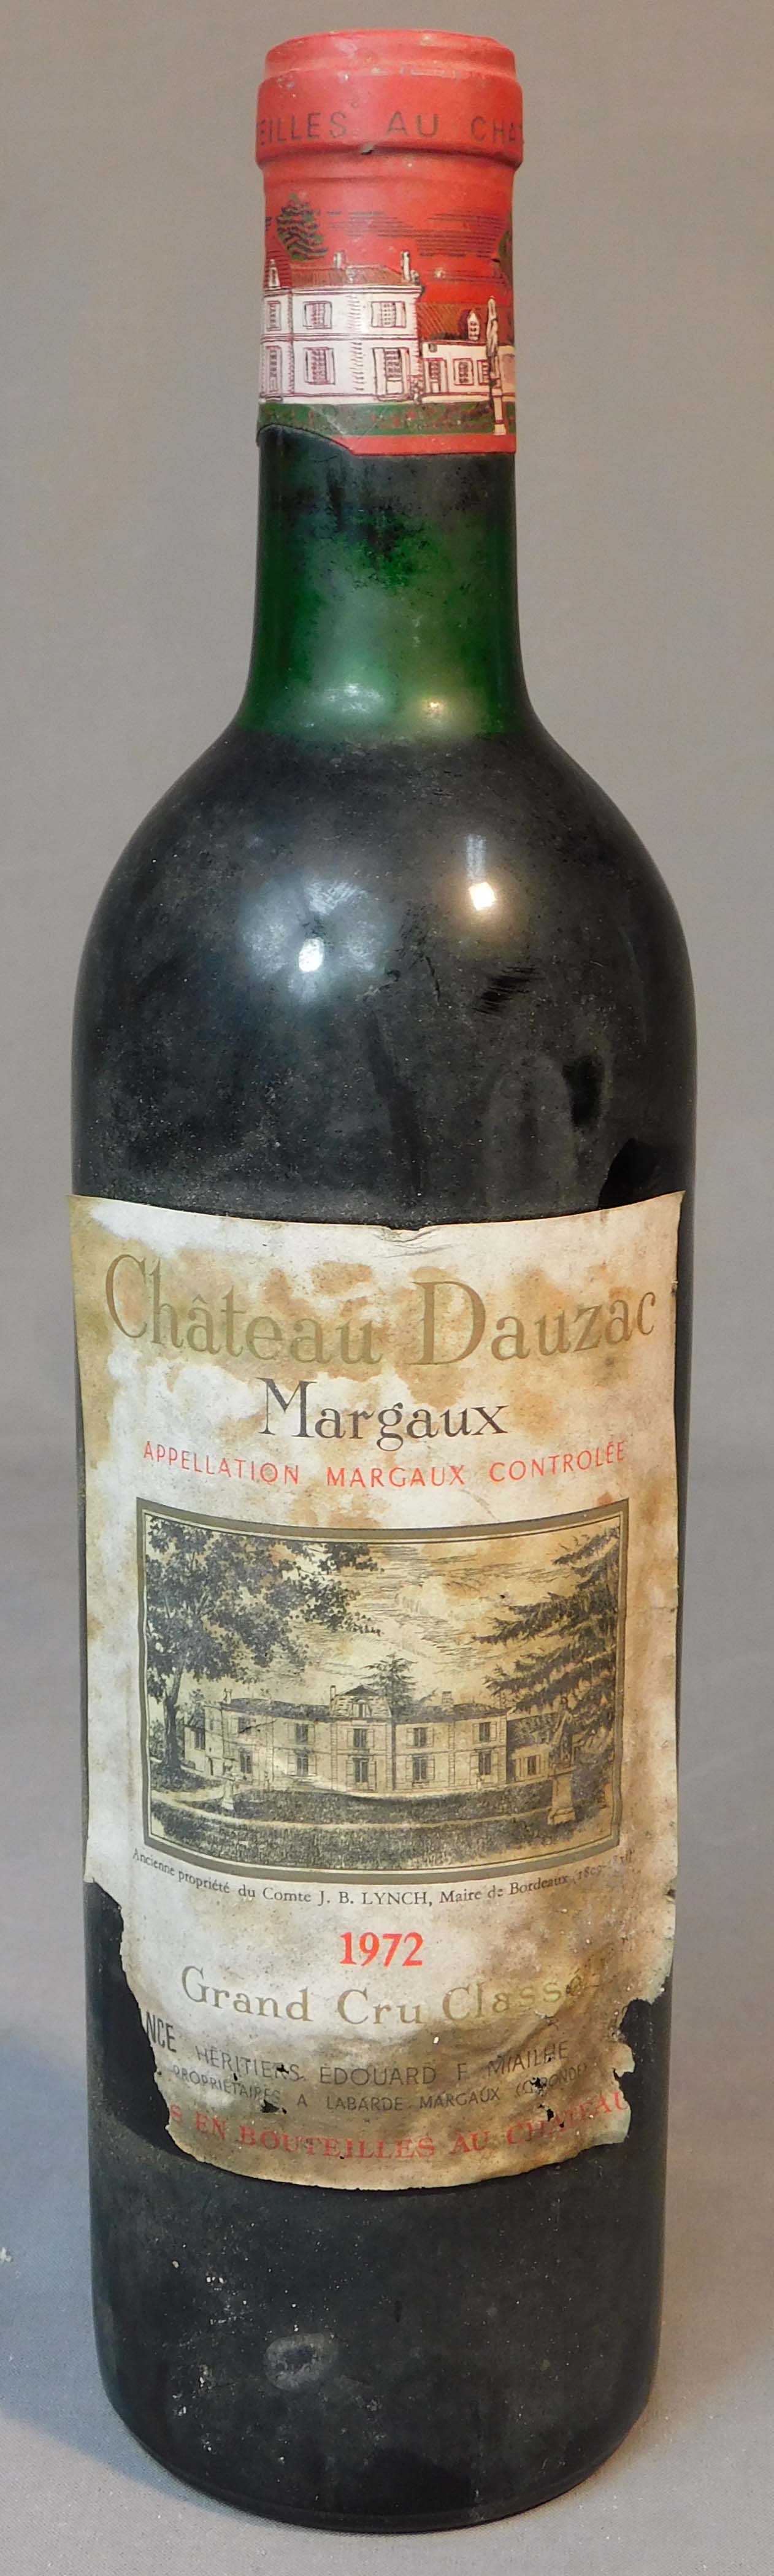 3 Flaschen Bordeaux Grand Cru Classé. Rotwein Frankreich. - Image 5 of 18